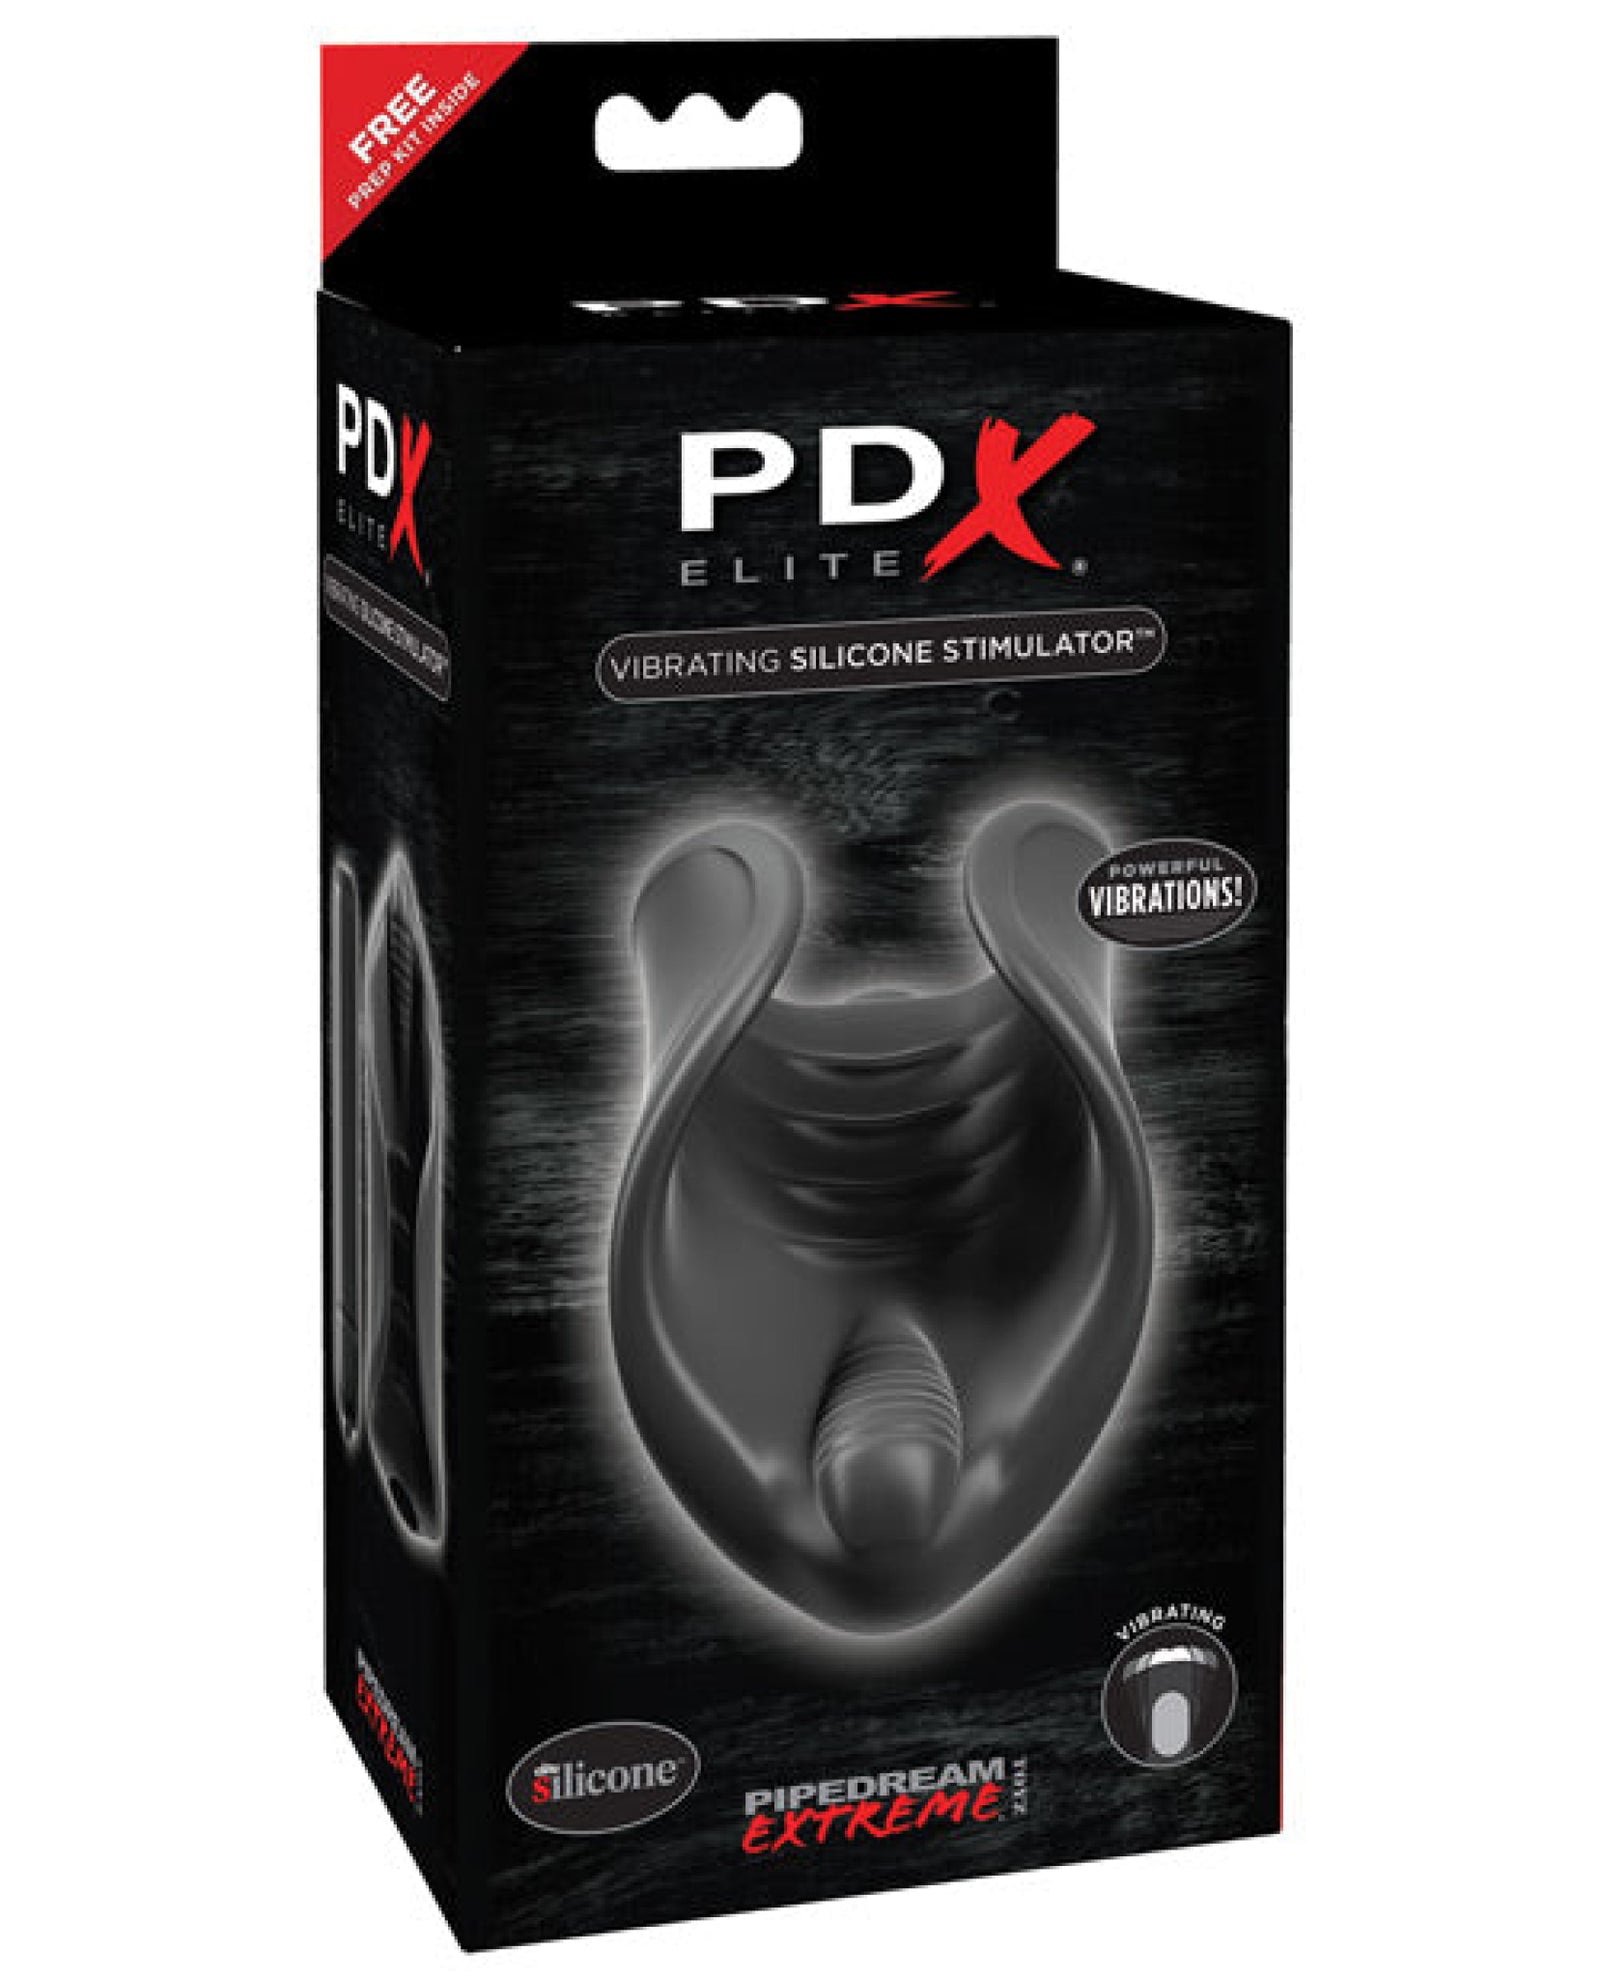 Pdx Elite Vibrating Silicone Stimulator PDX Elite